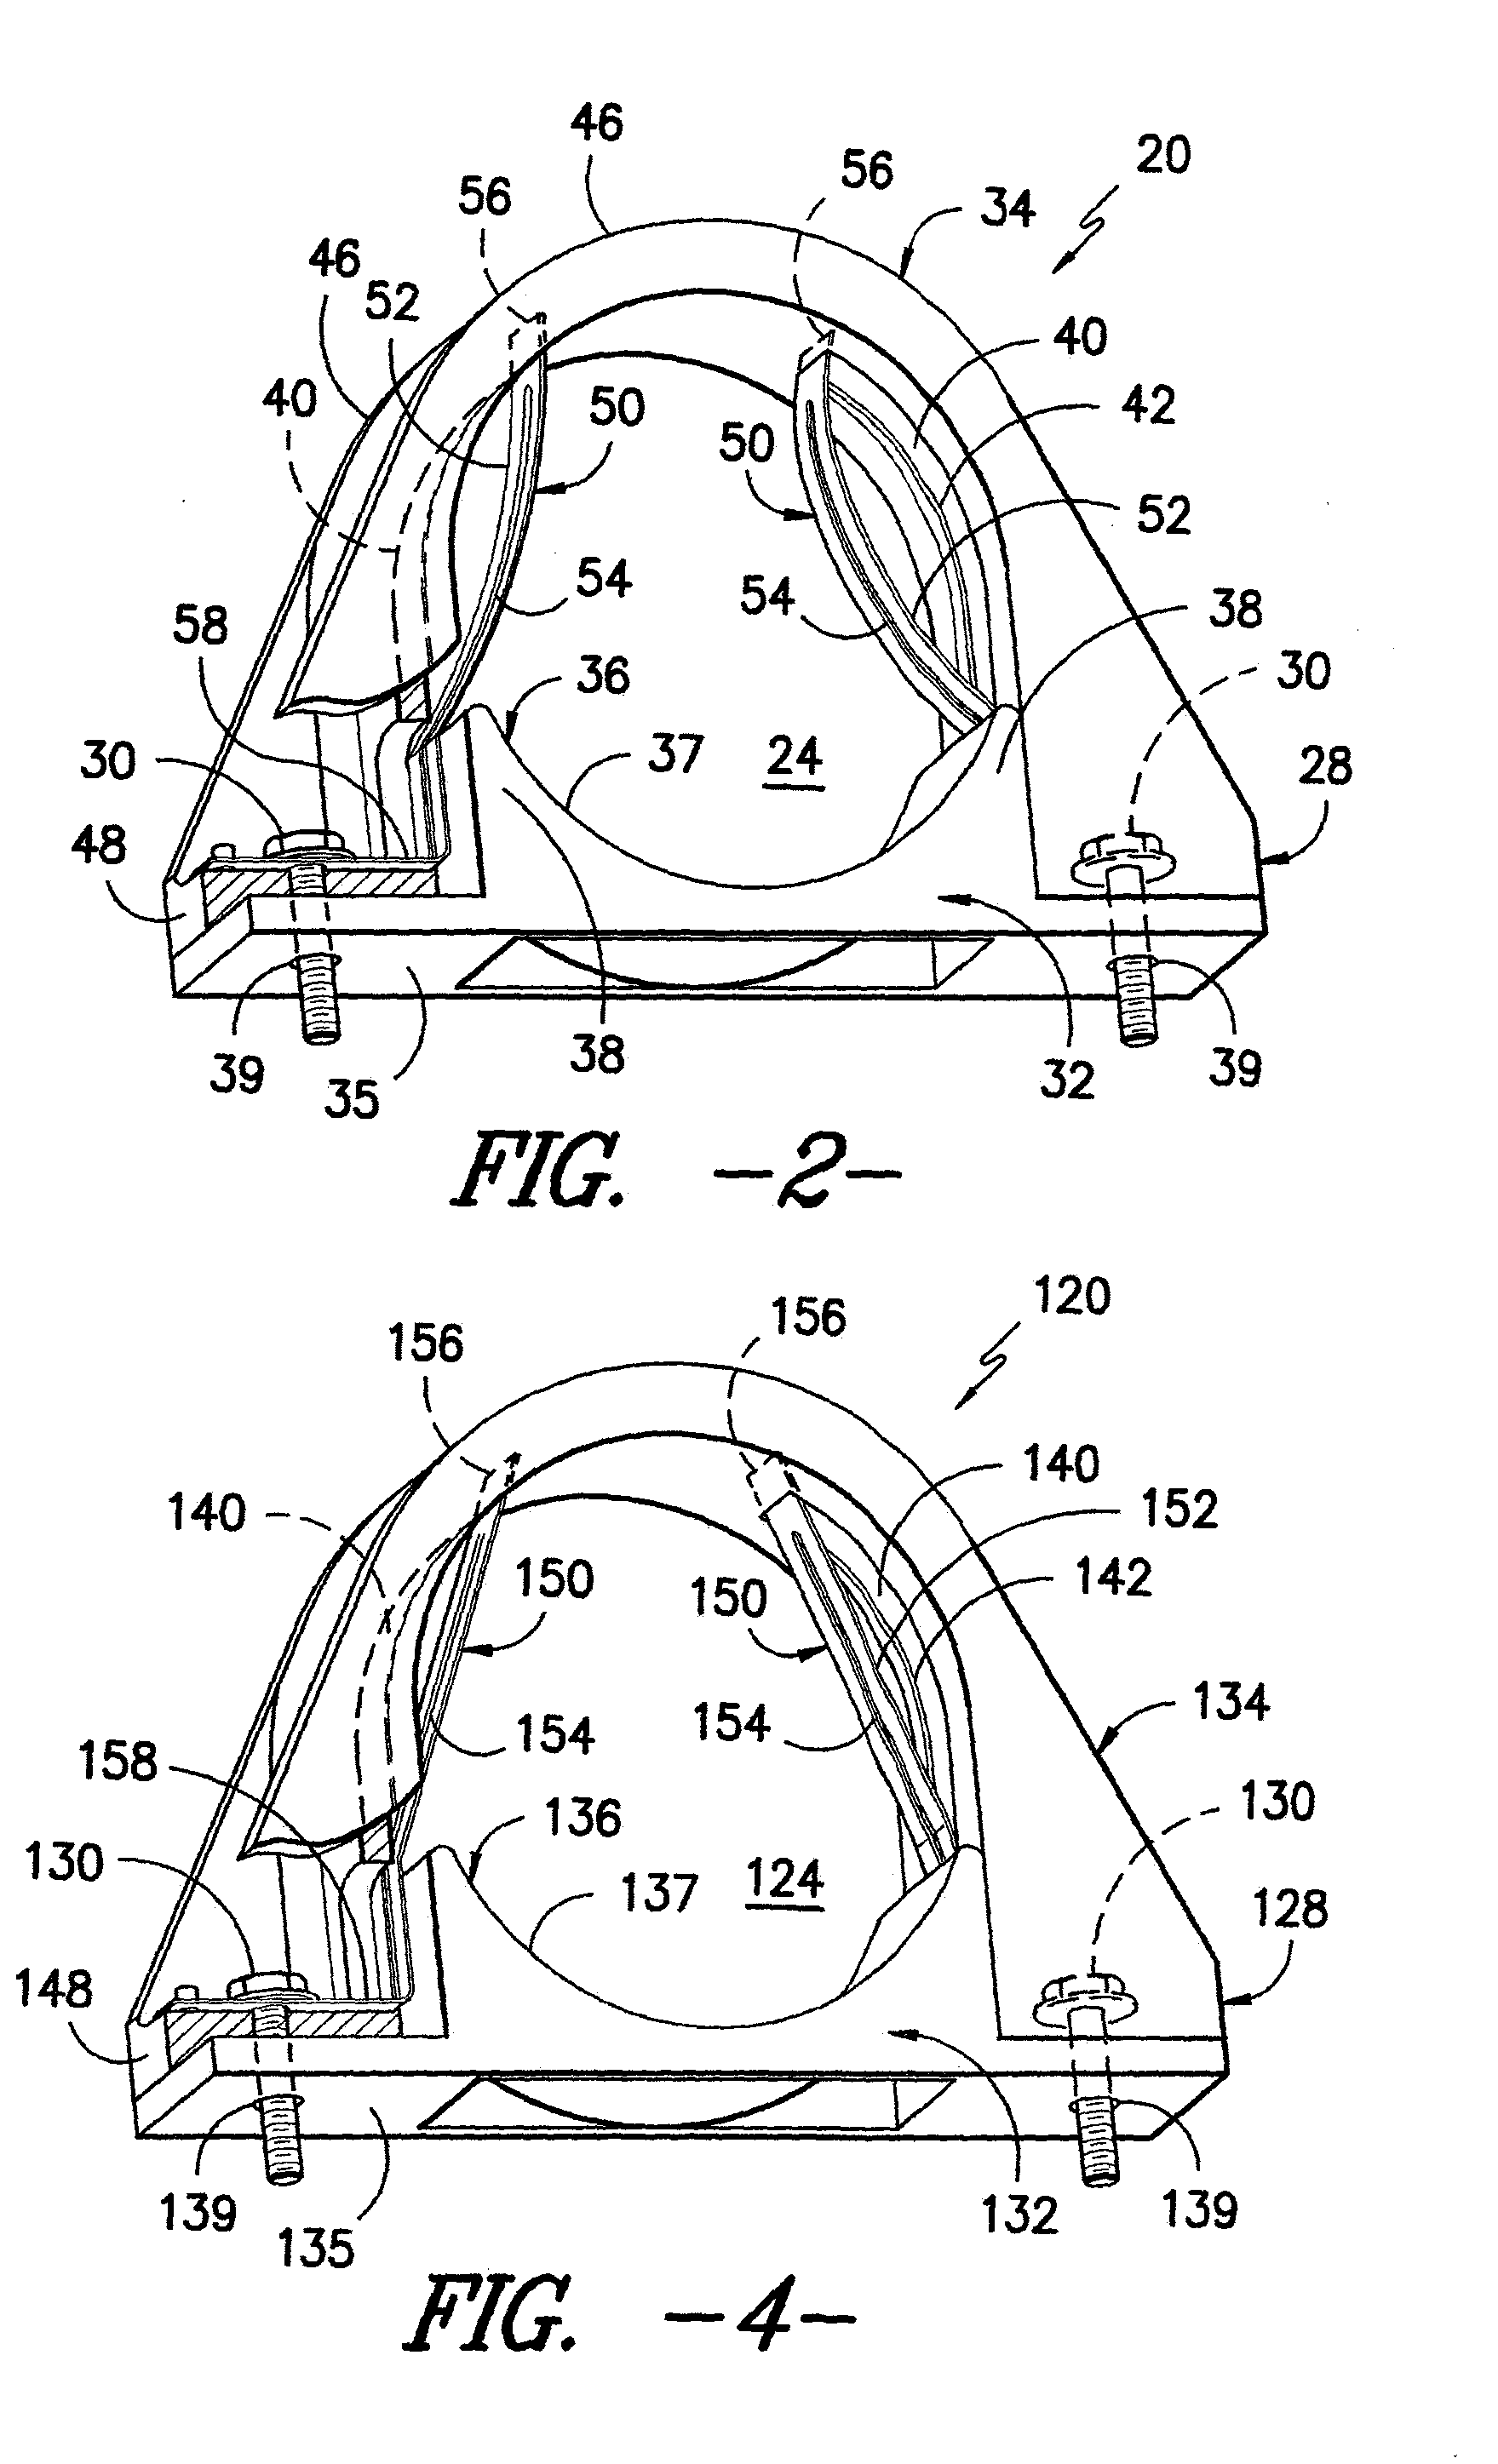 Saddle clamp having electrical bonding character